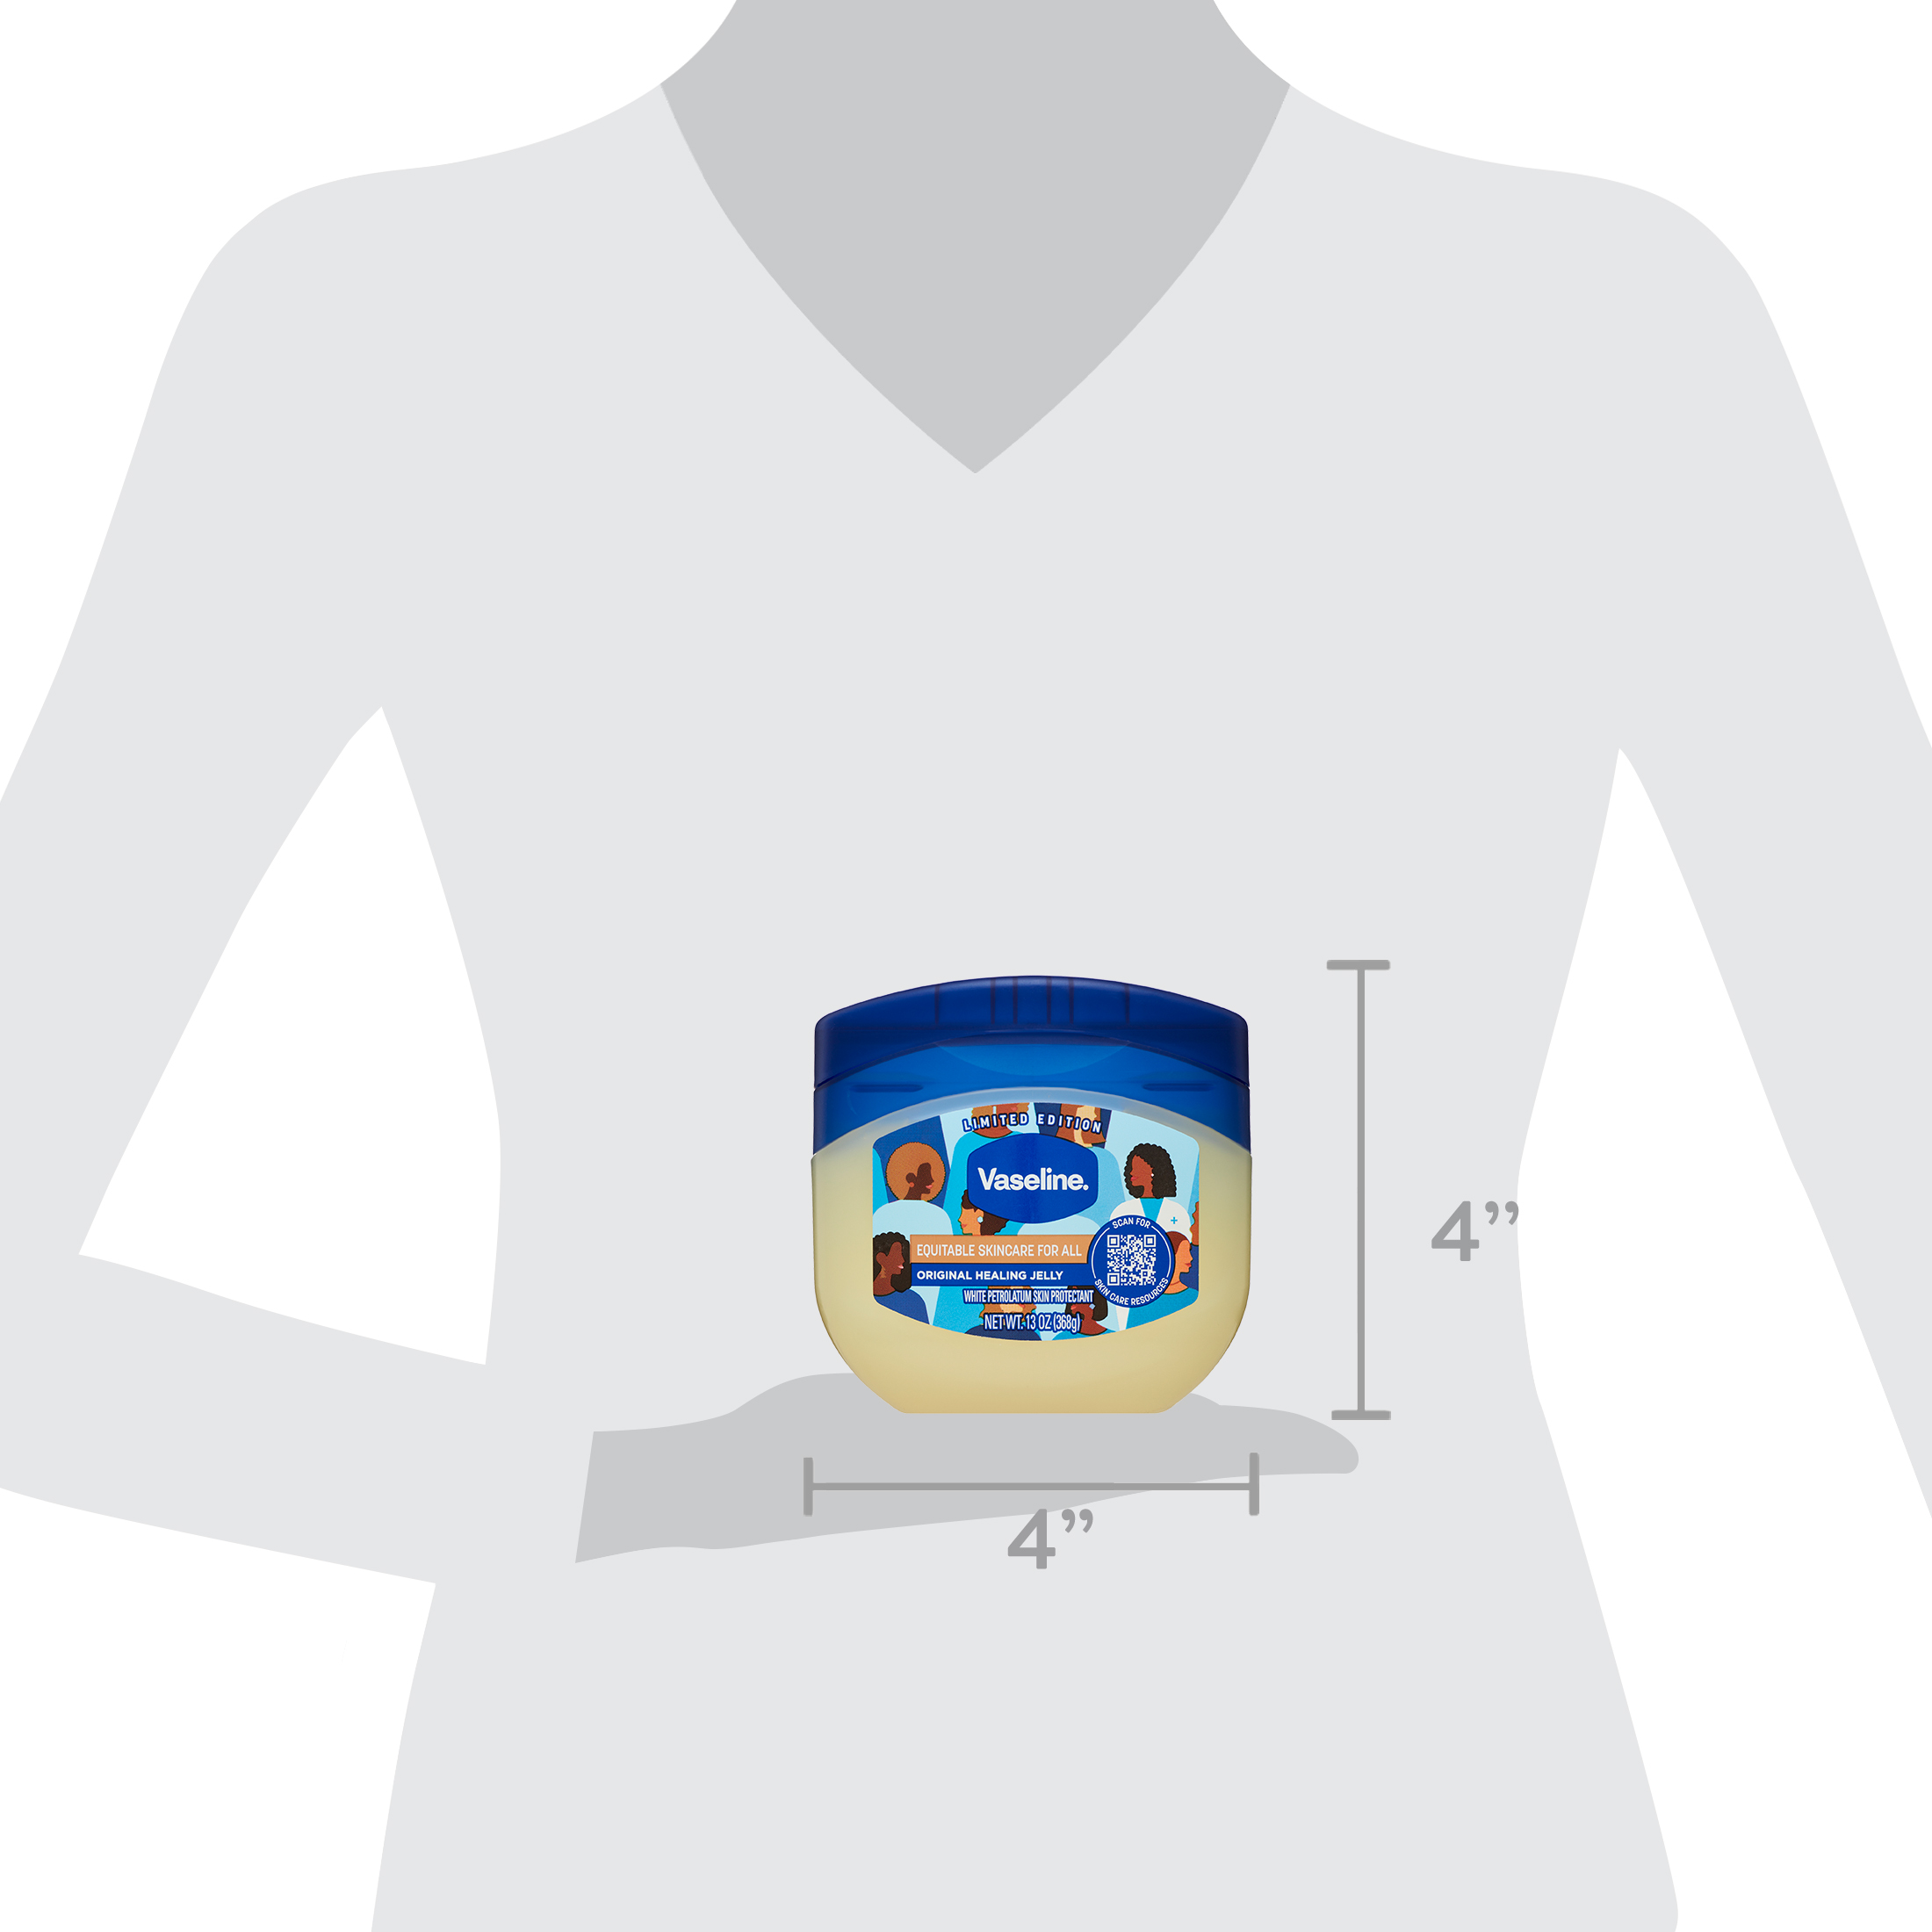 Vaseline Original Healing Moisturizing Petroleum Jelly for Dry Skin, 13 oz (2 Count) - image 4 of 7